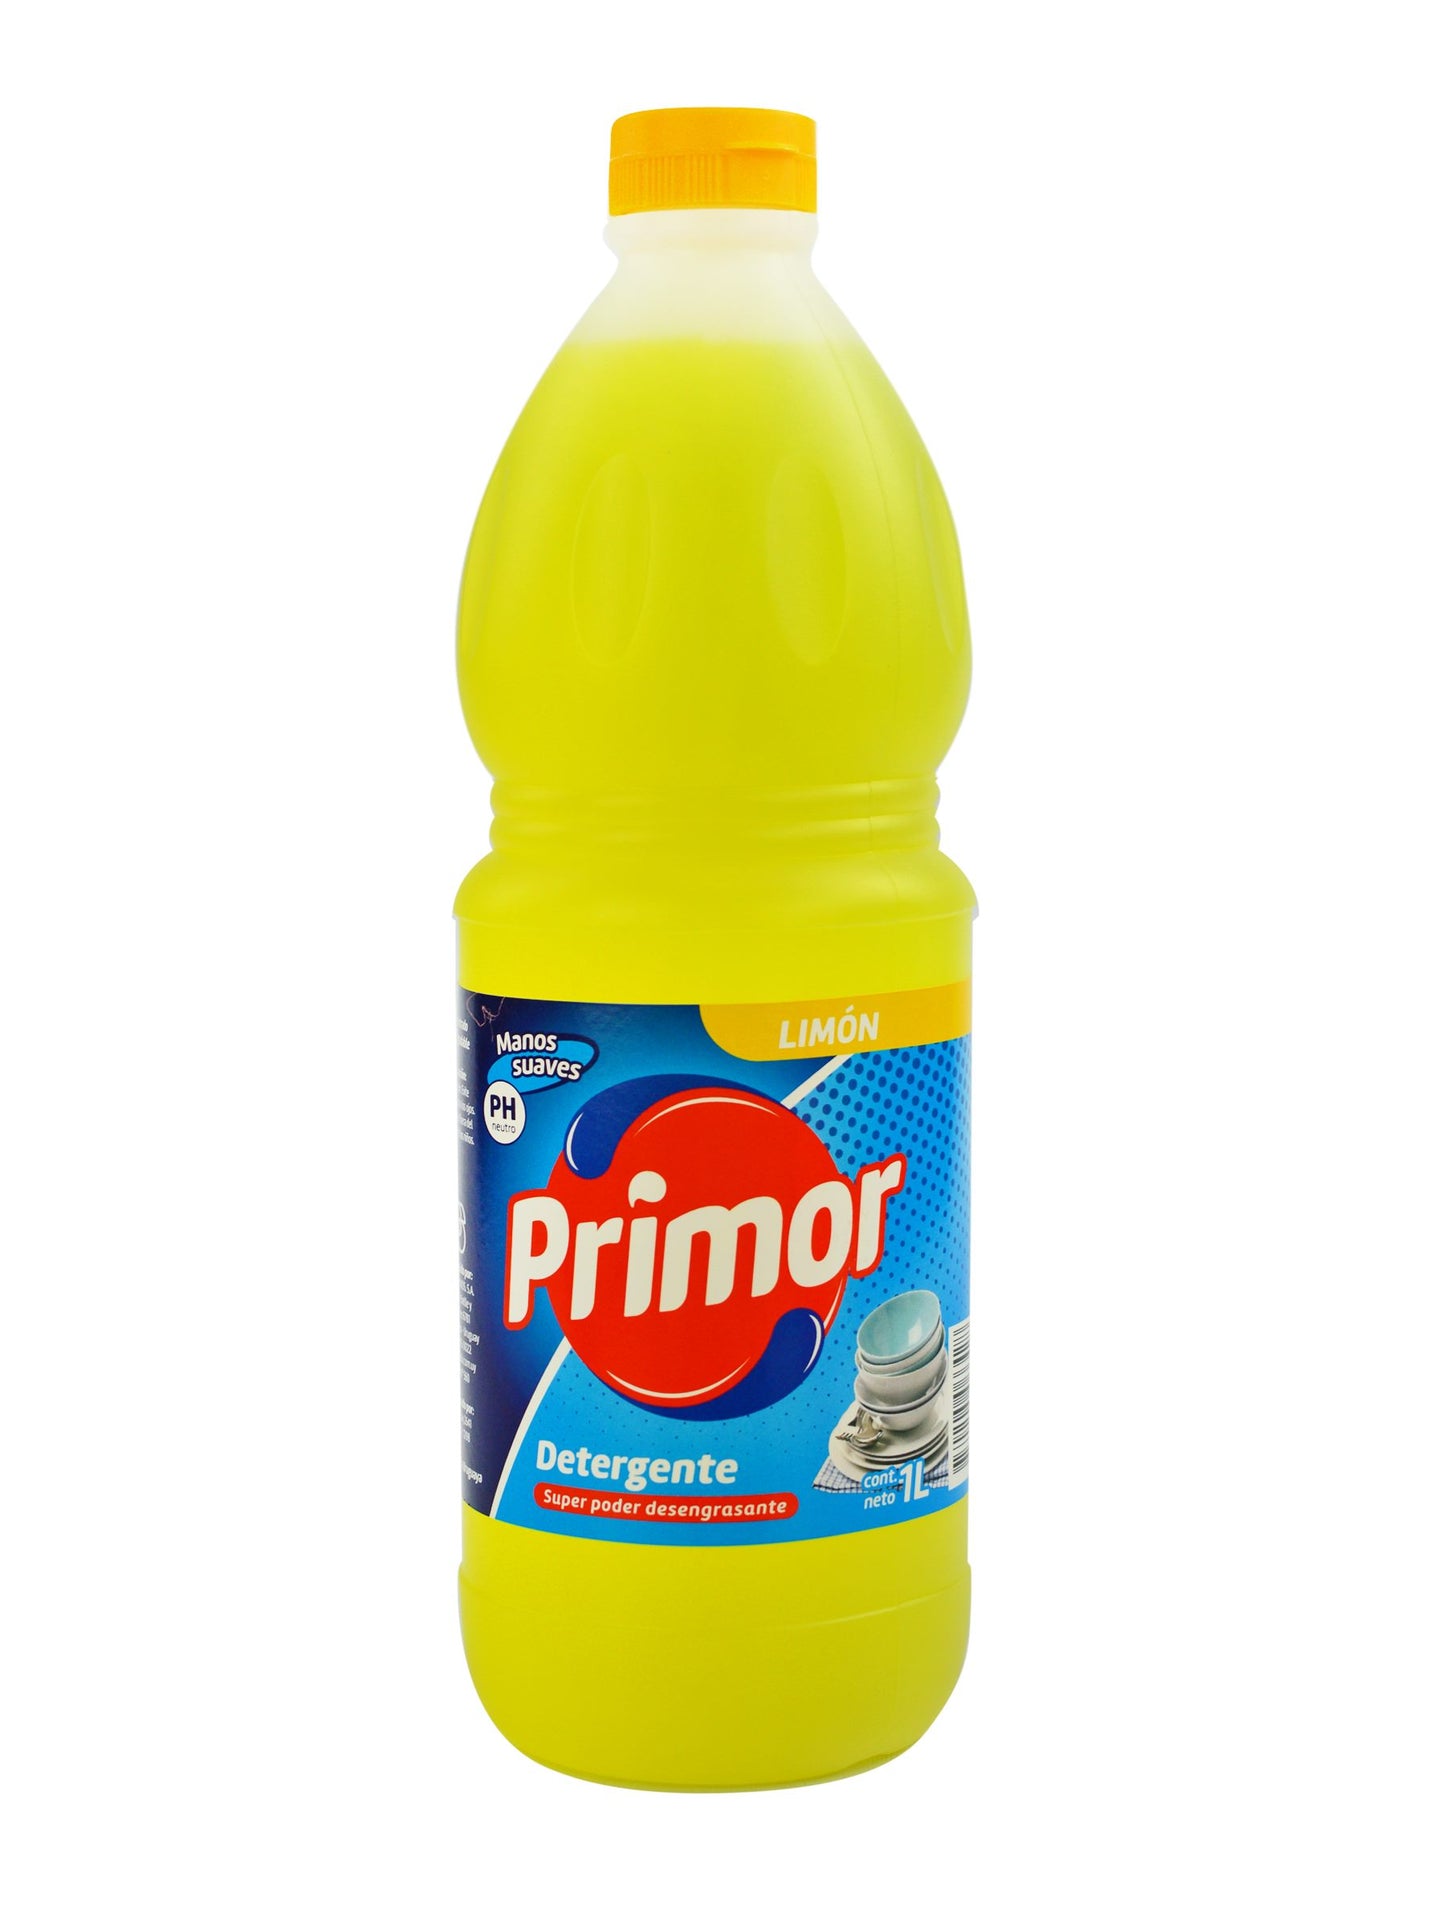 Detergente limón 1 Lt. Primor